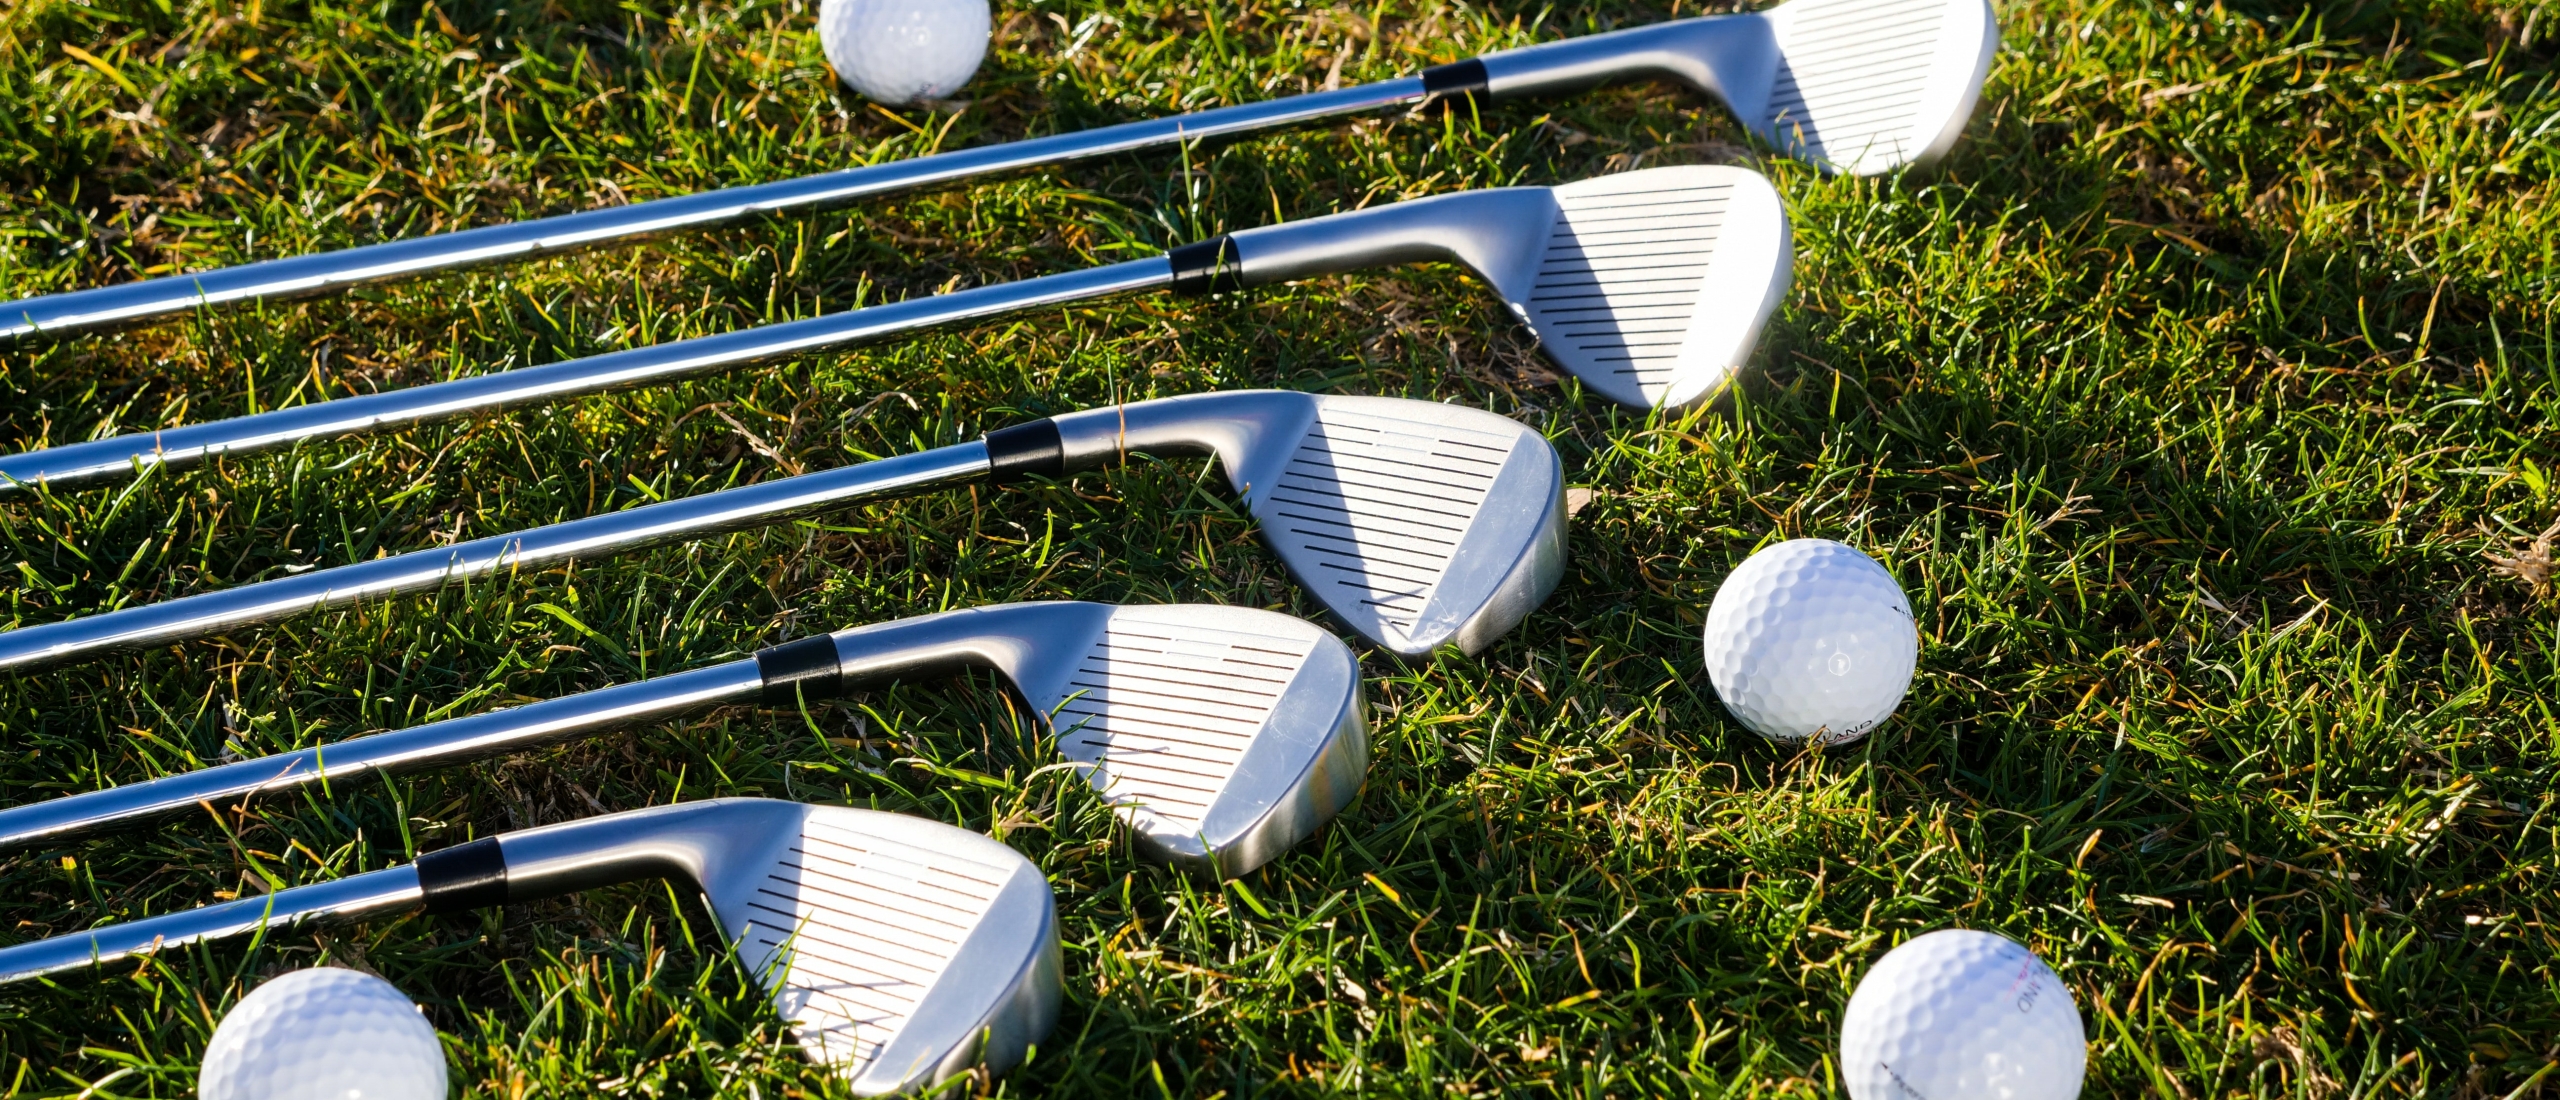 Golfclubs kopen korting